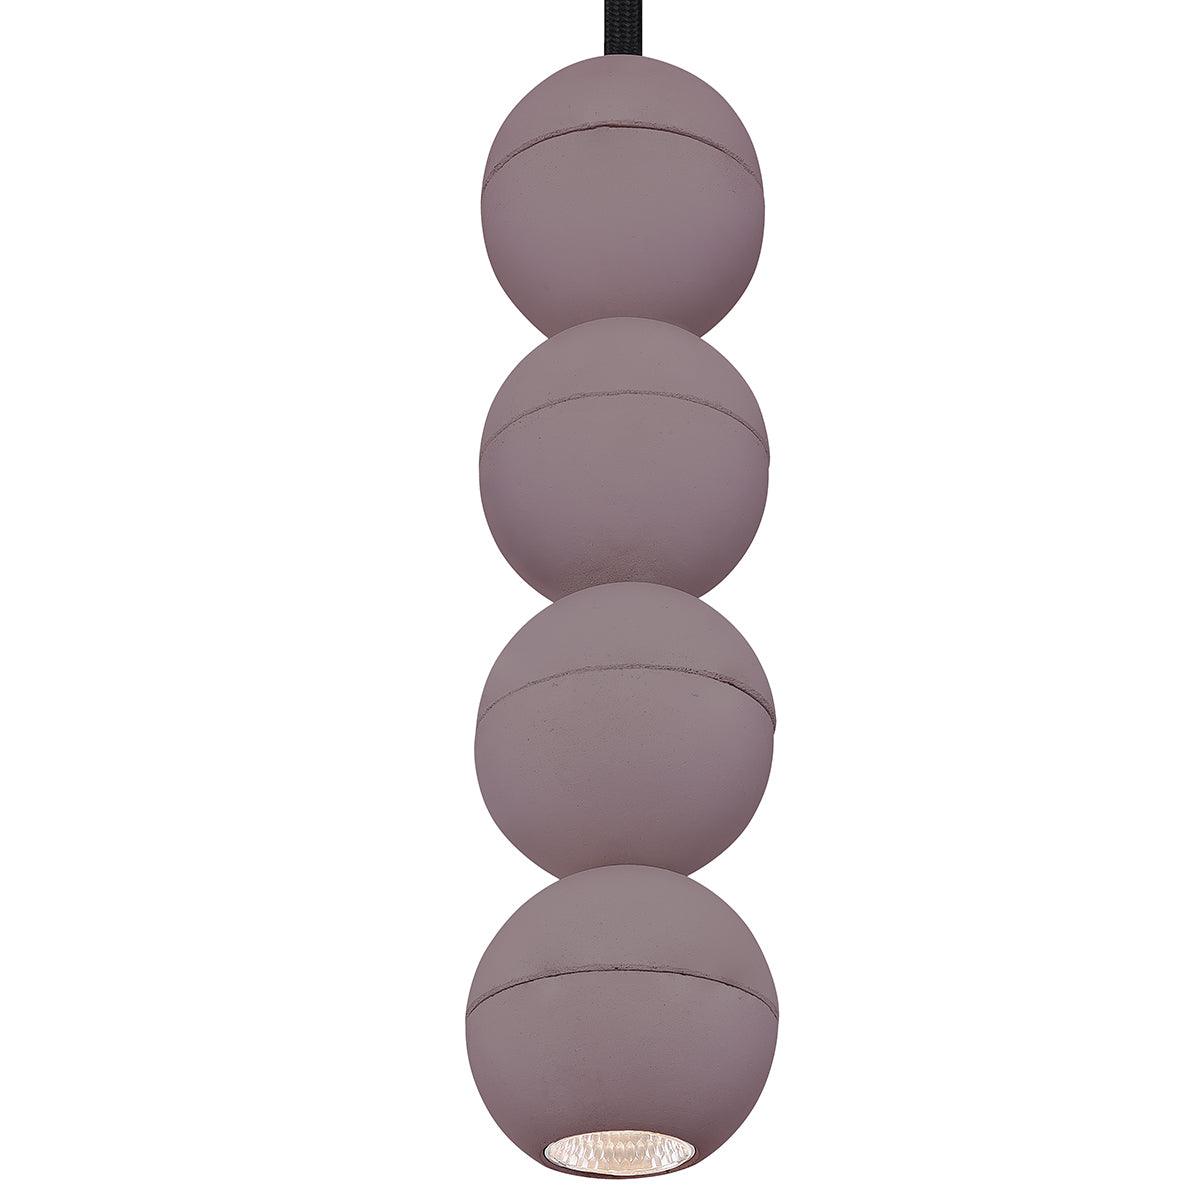 Bola Concrete LED Pendant Lamp - WOO .Design